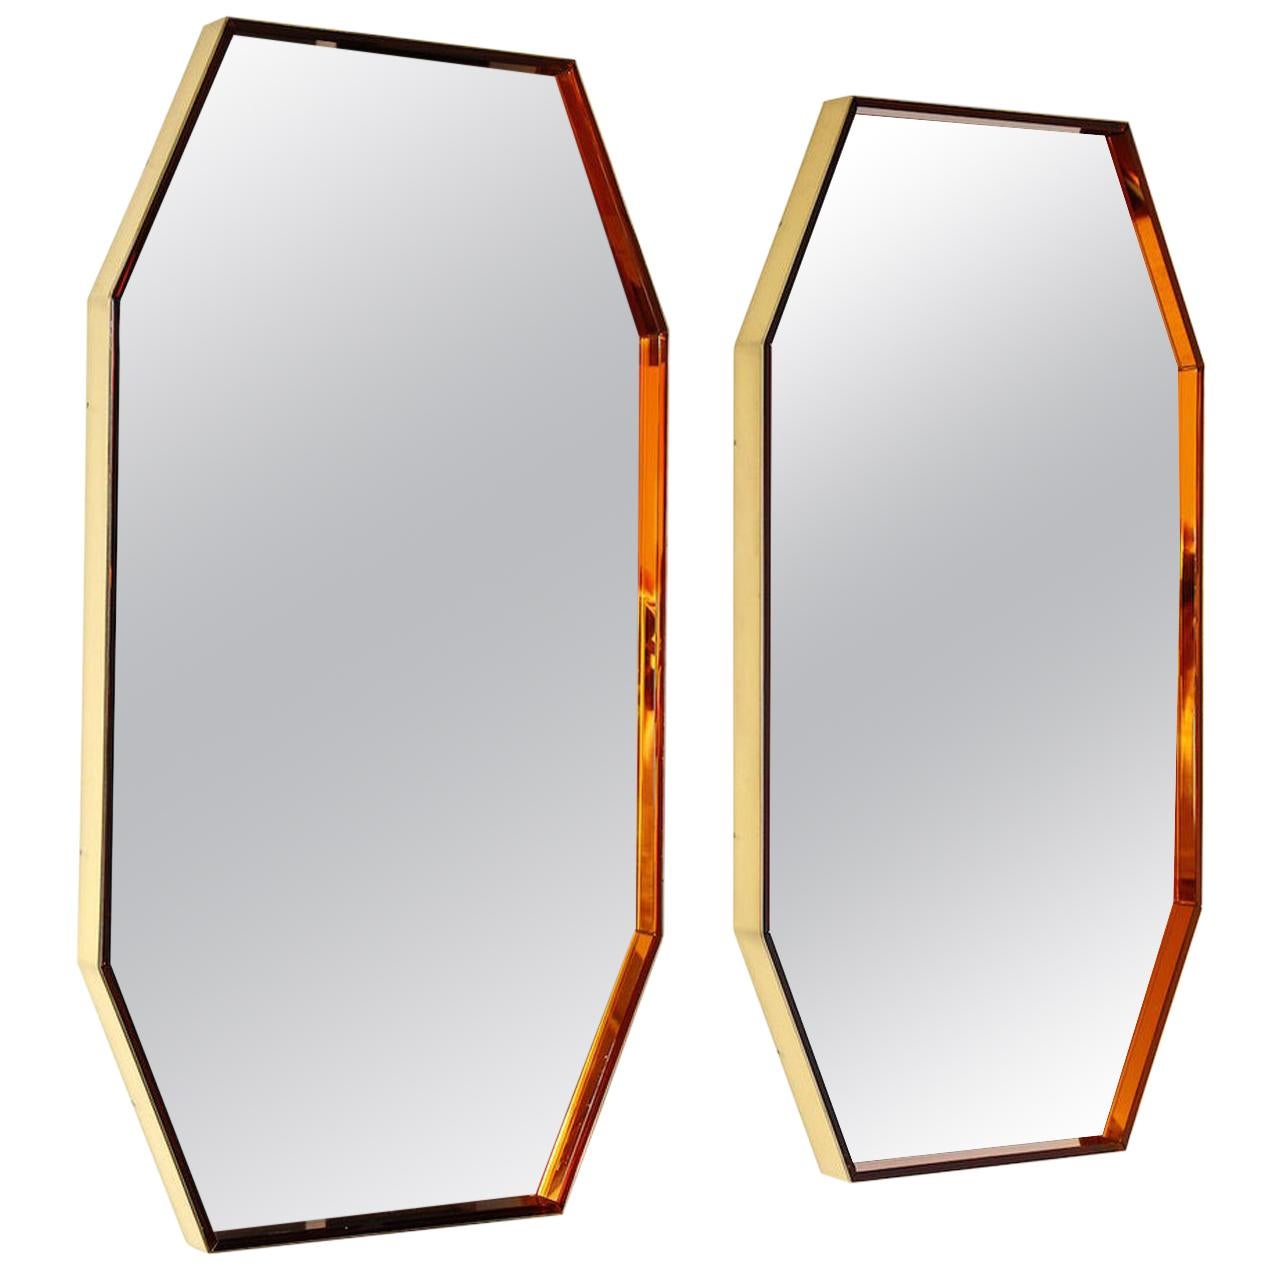 Pair of Octagonal Wall Mirrors #2355 by Fontana Arte